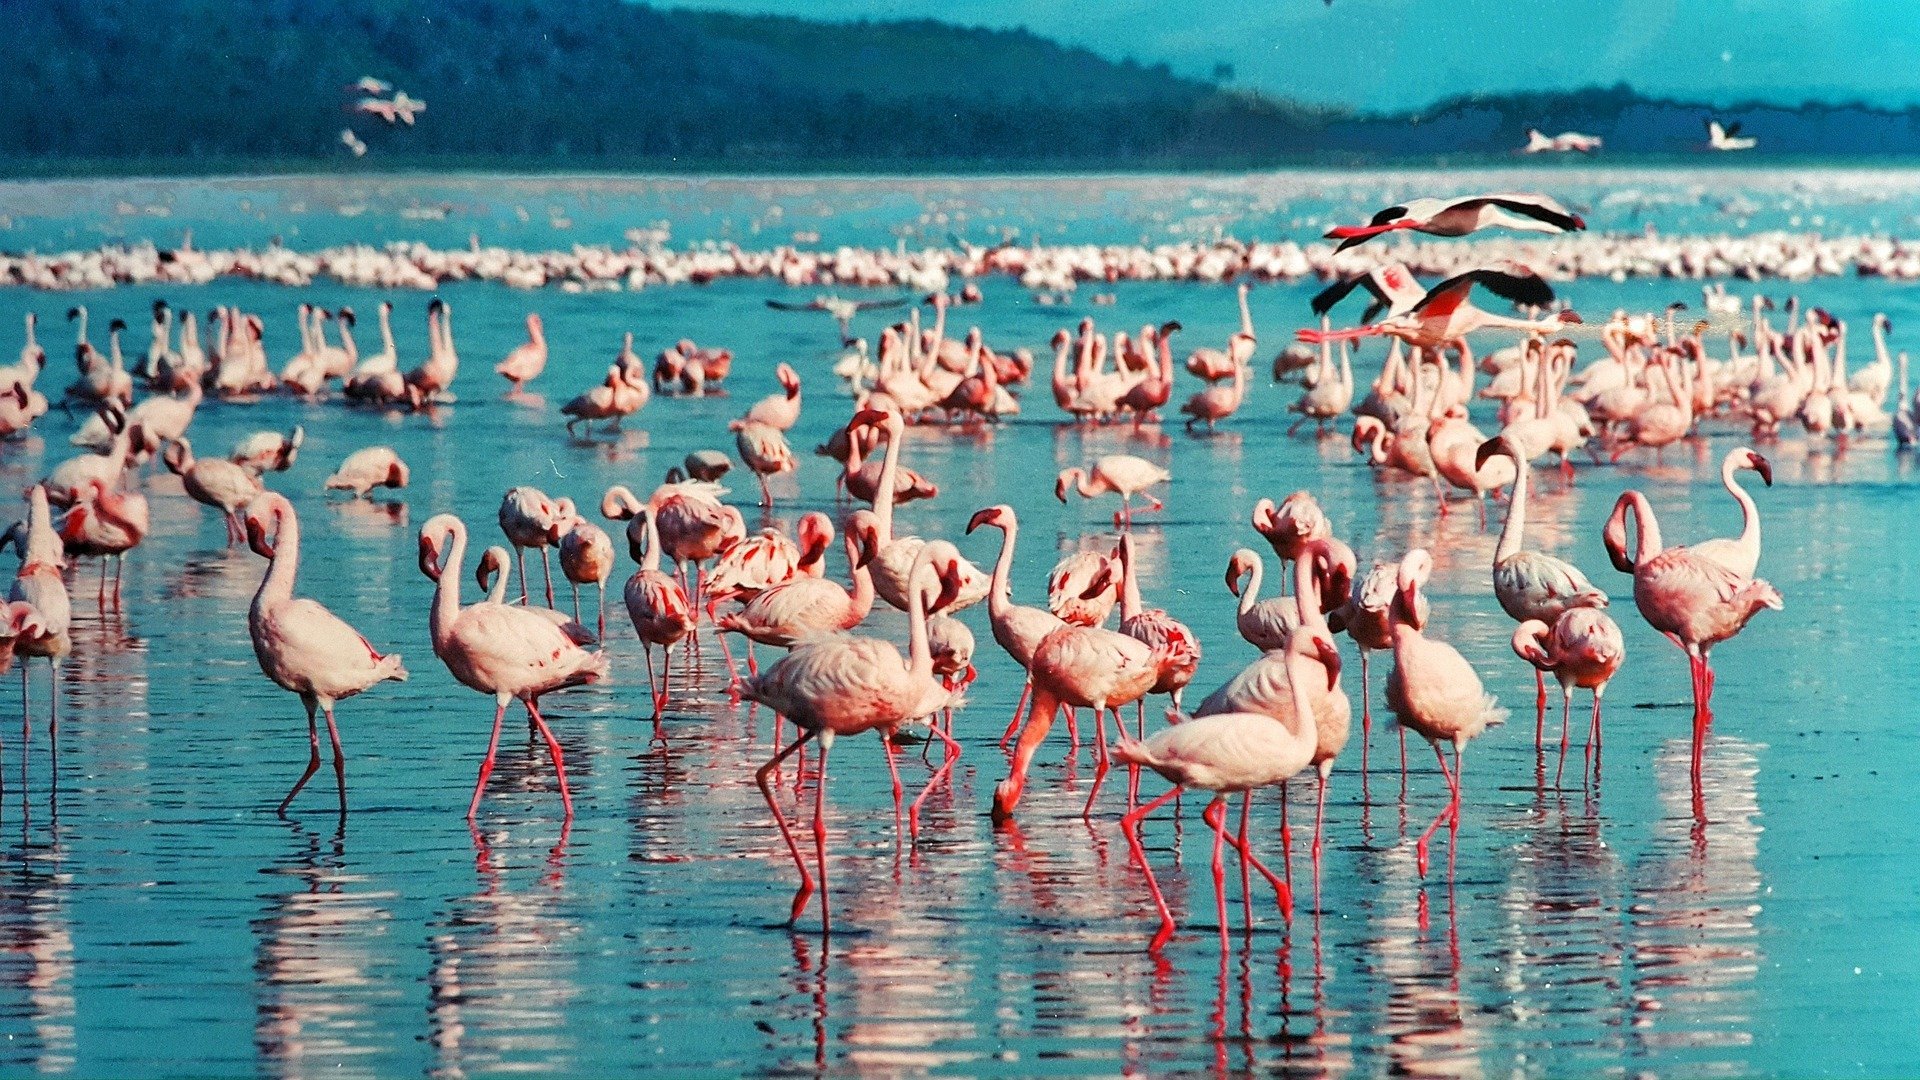 pink-flamingo-1484781_1920.jpg